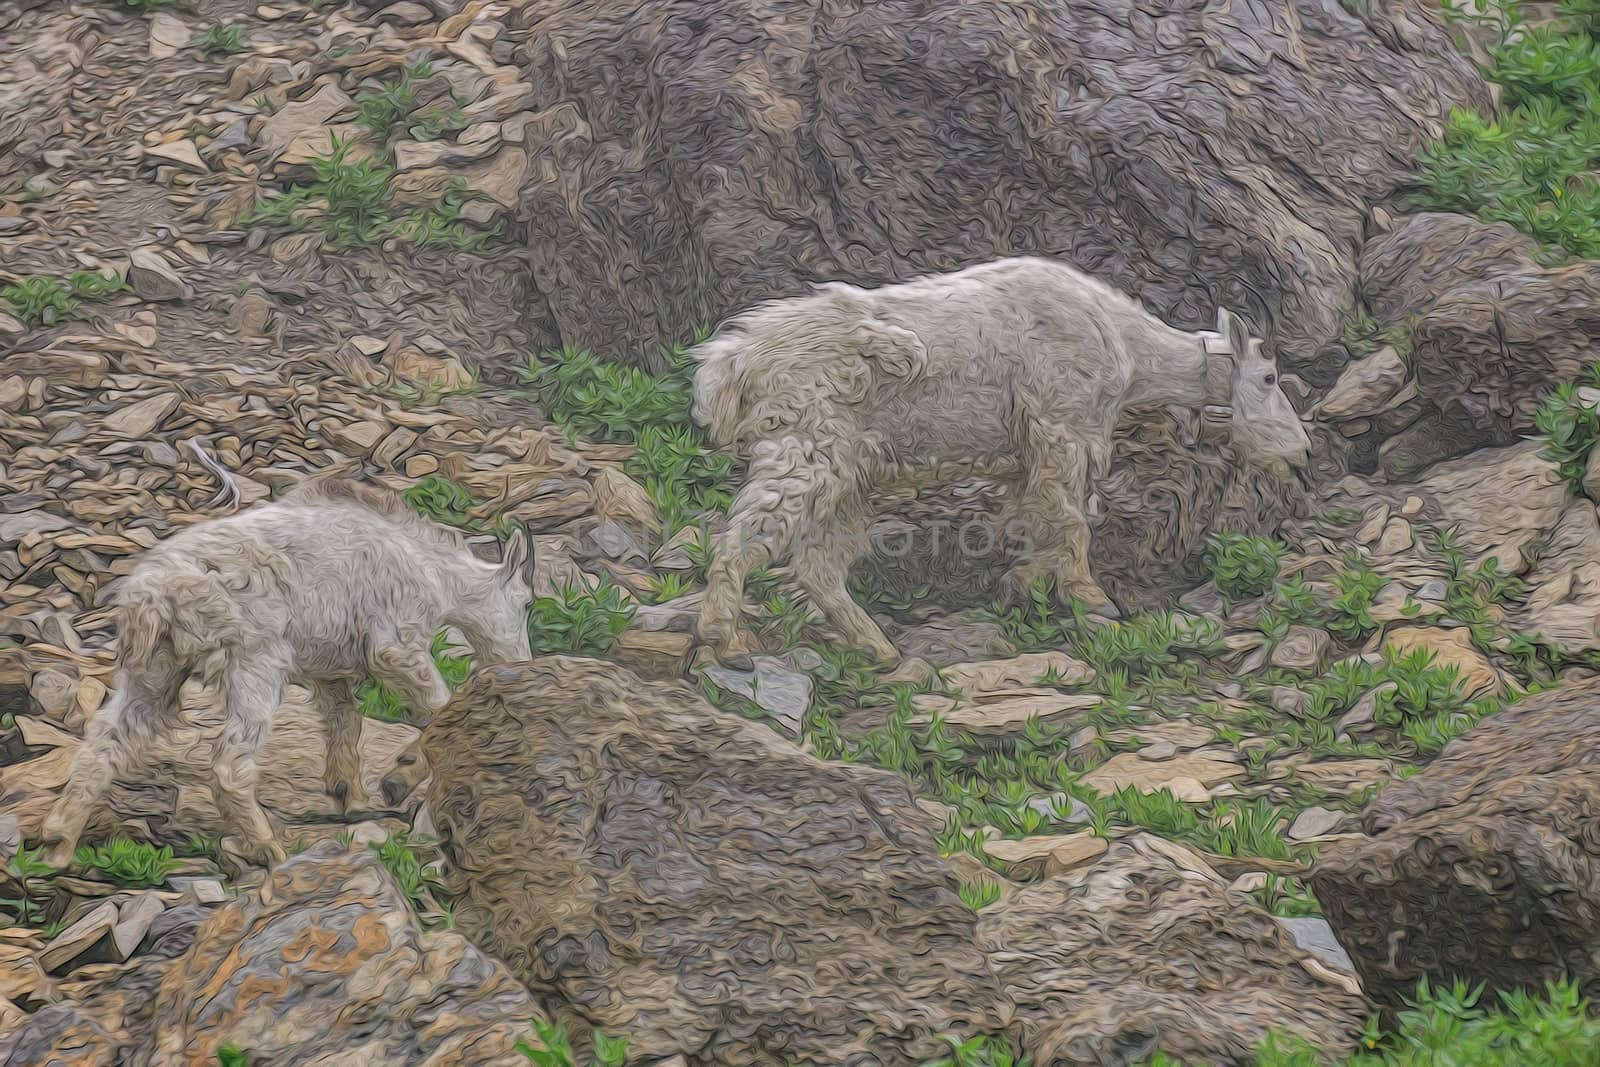 Mountain Goats by teacherdad48@yahoo.com